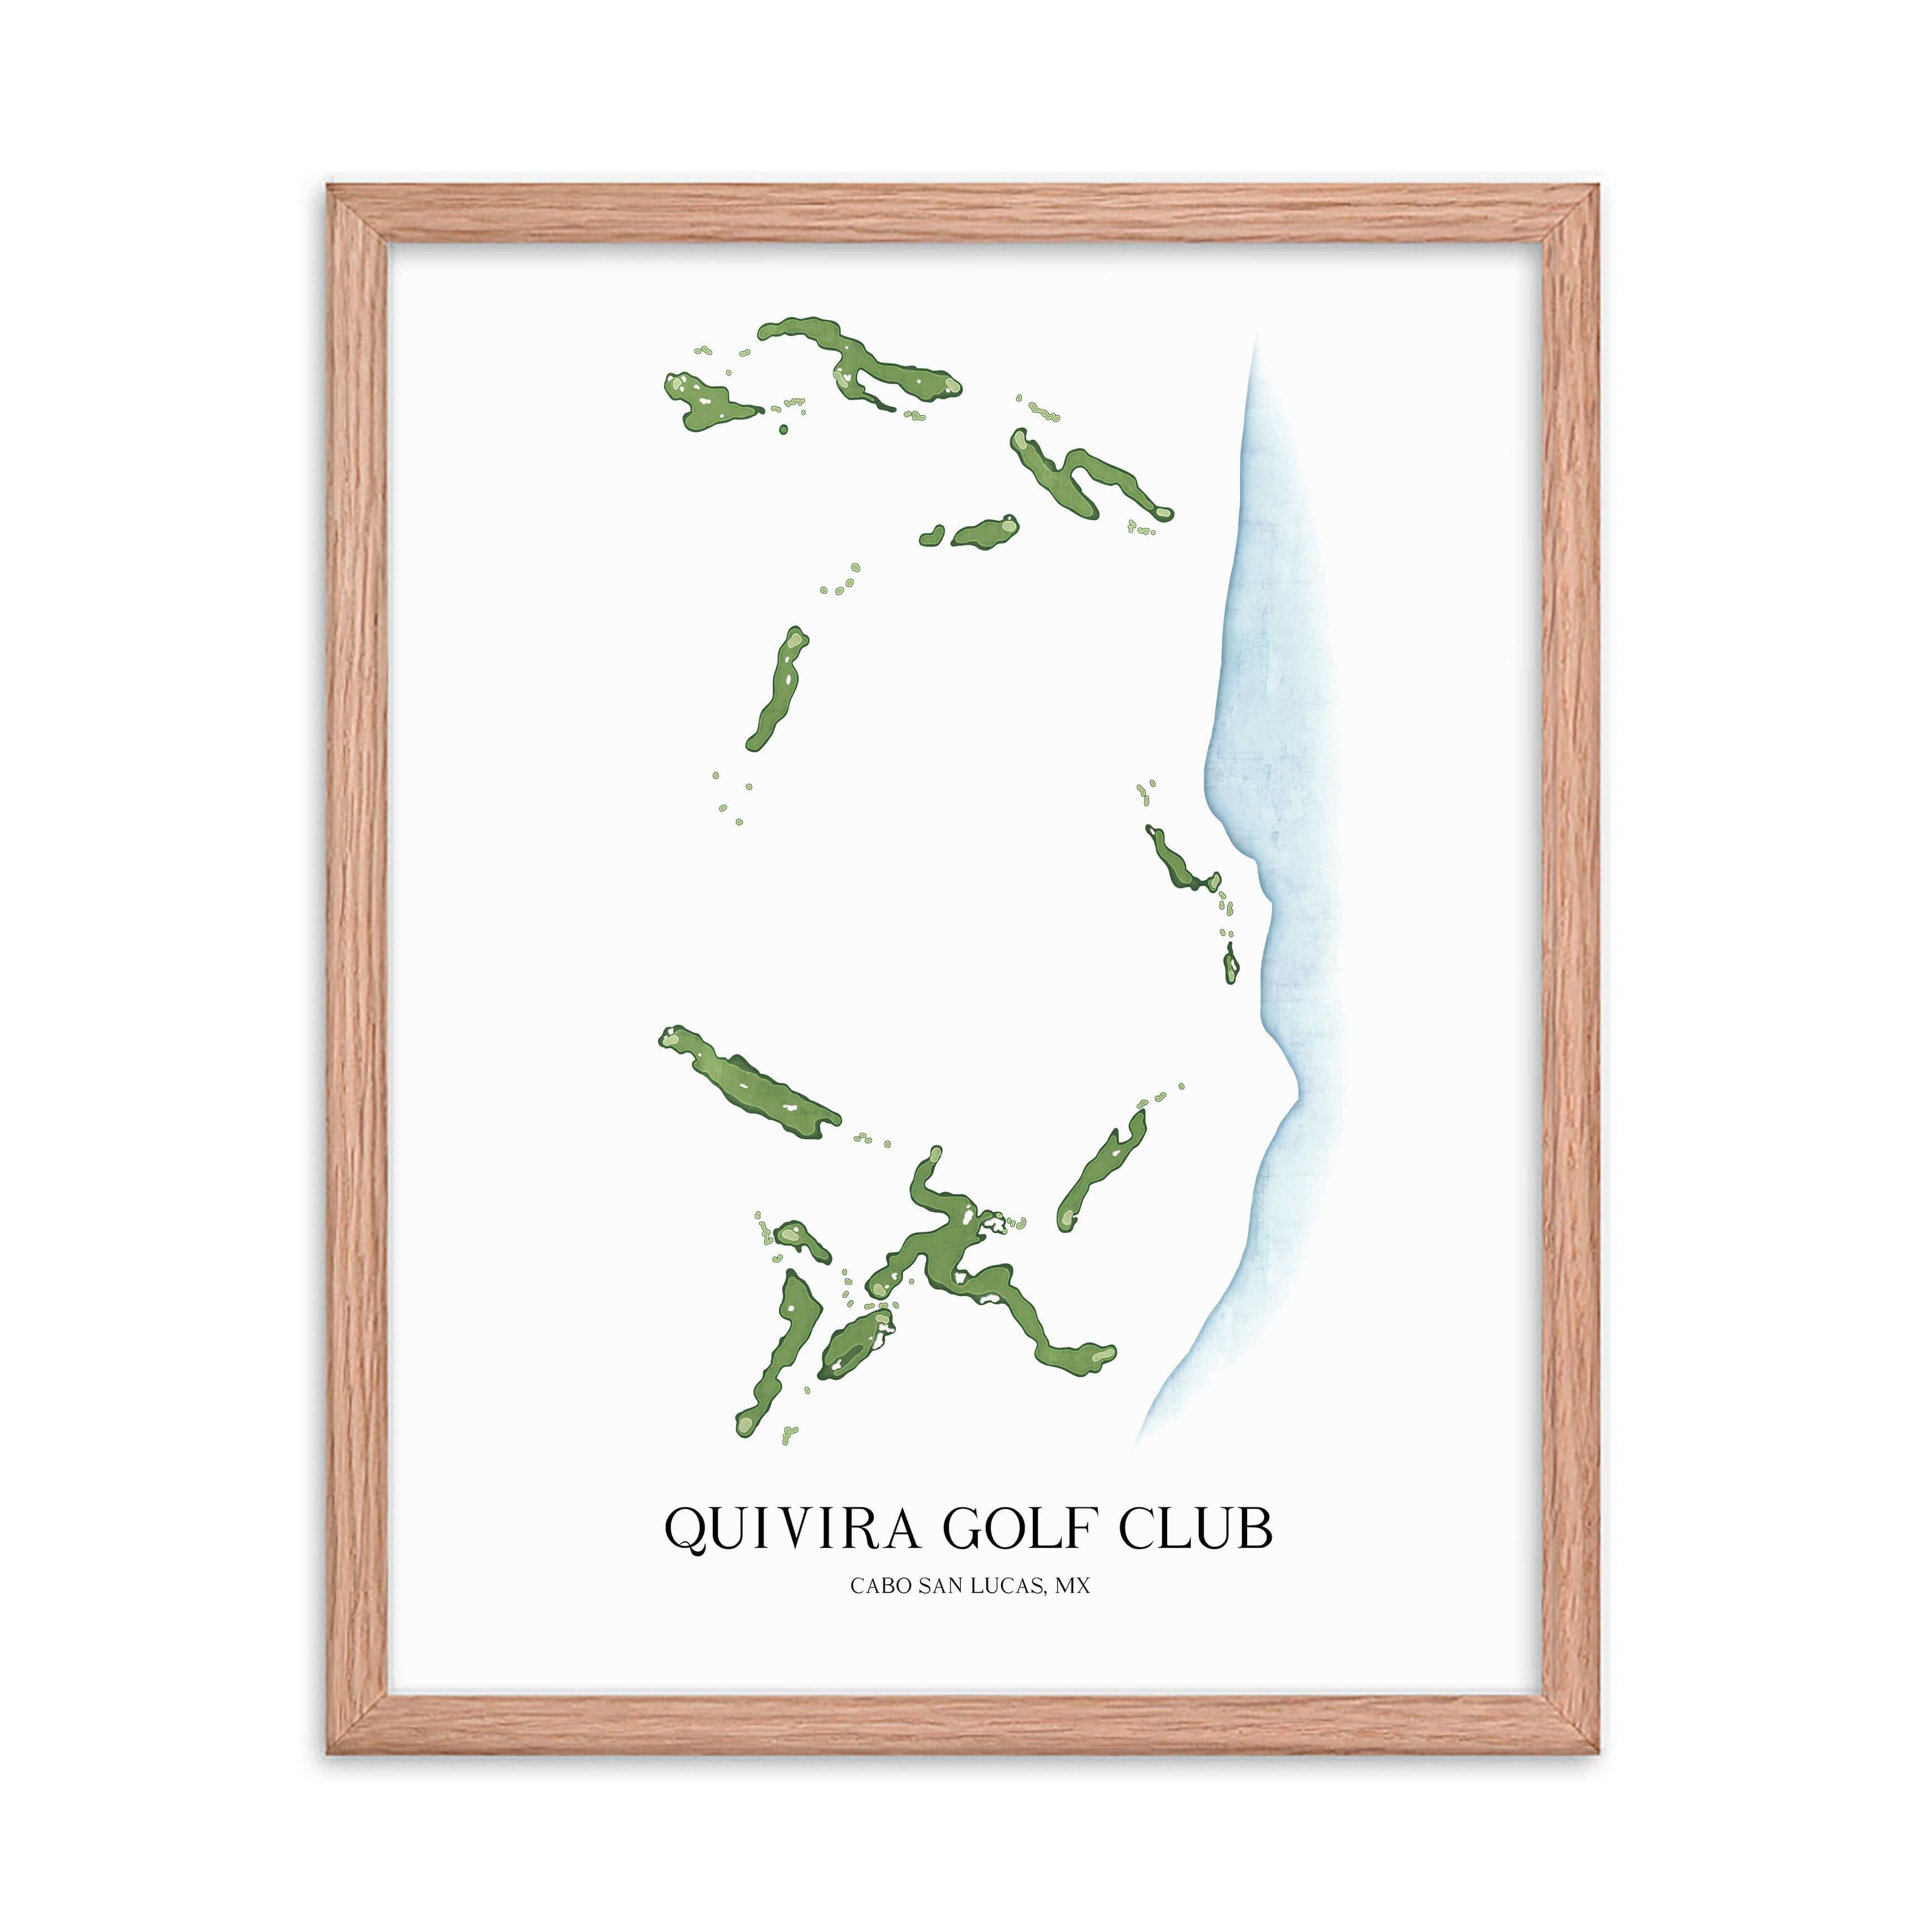 The 19th Hole Golf Shop - Golf Course Prints -  Quivira Golf Club - Cabo San Lucas Golf Course Map